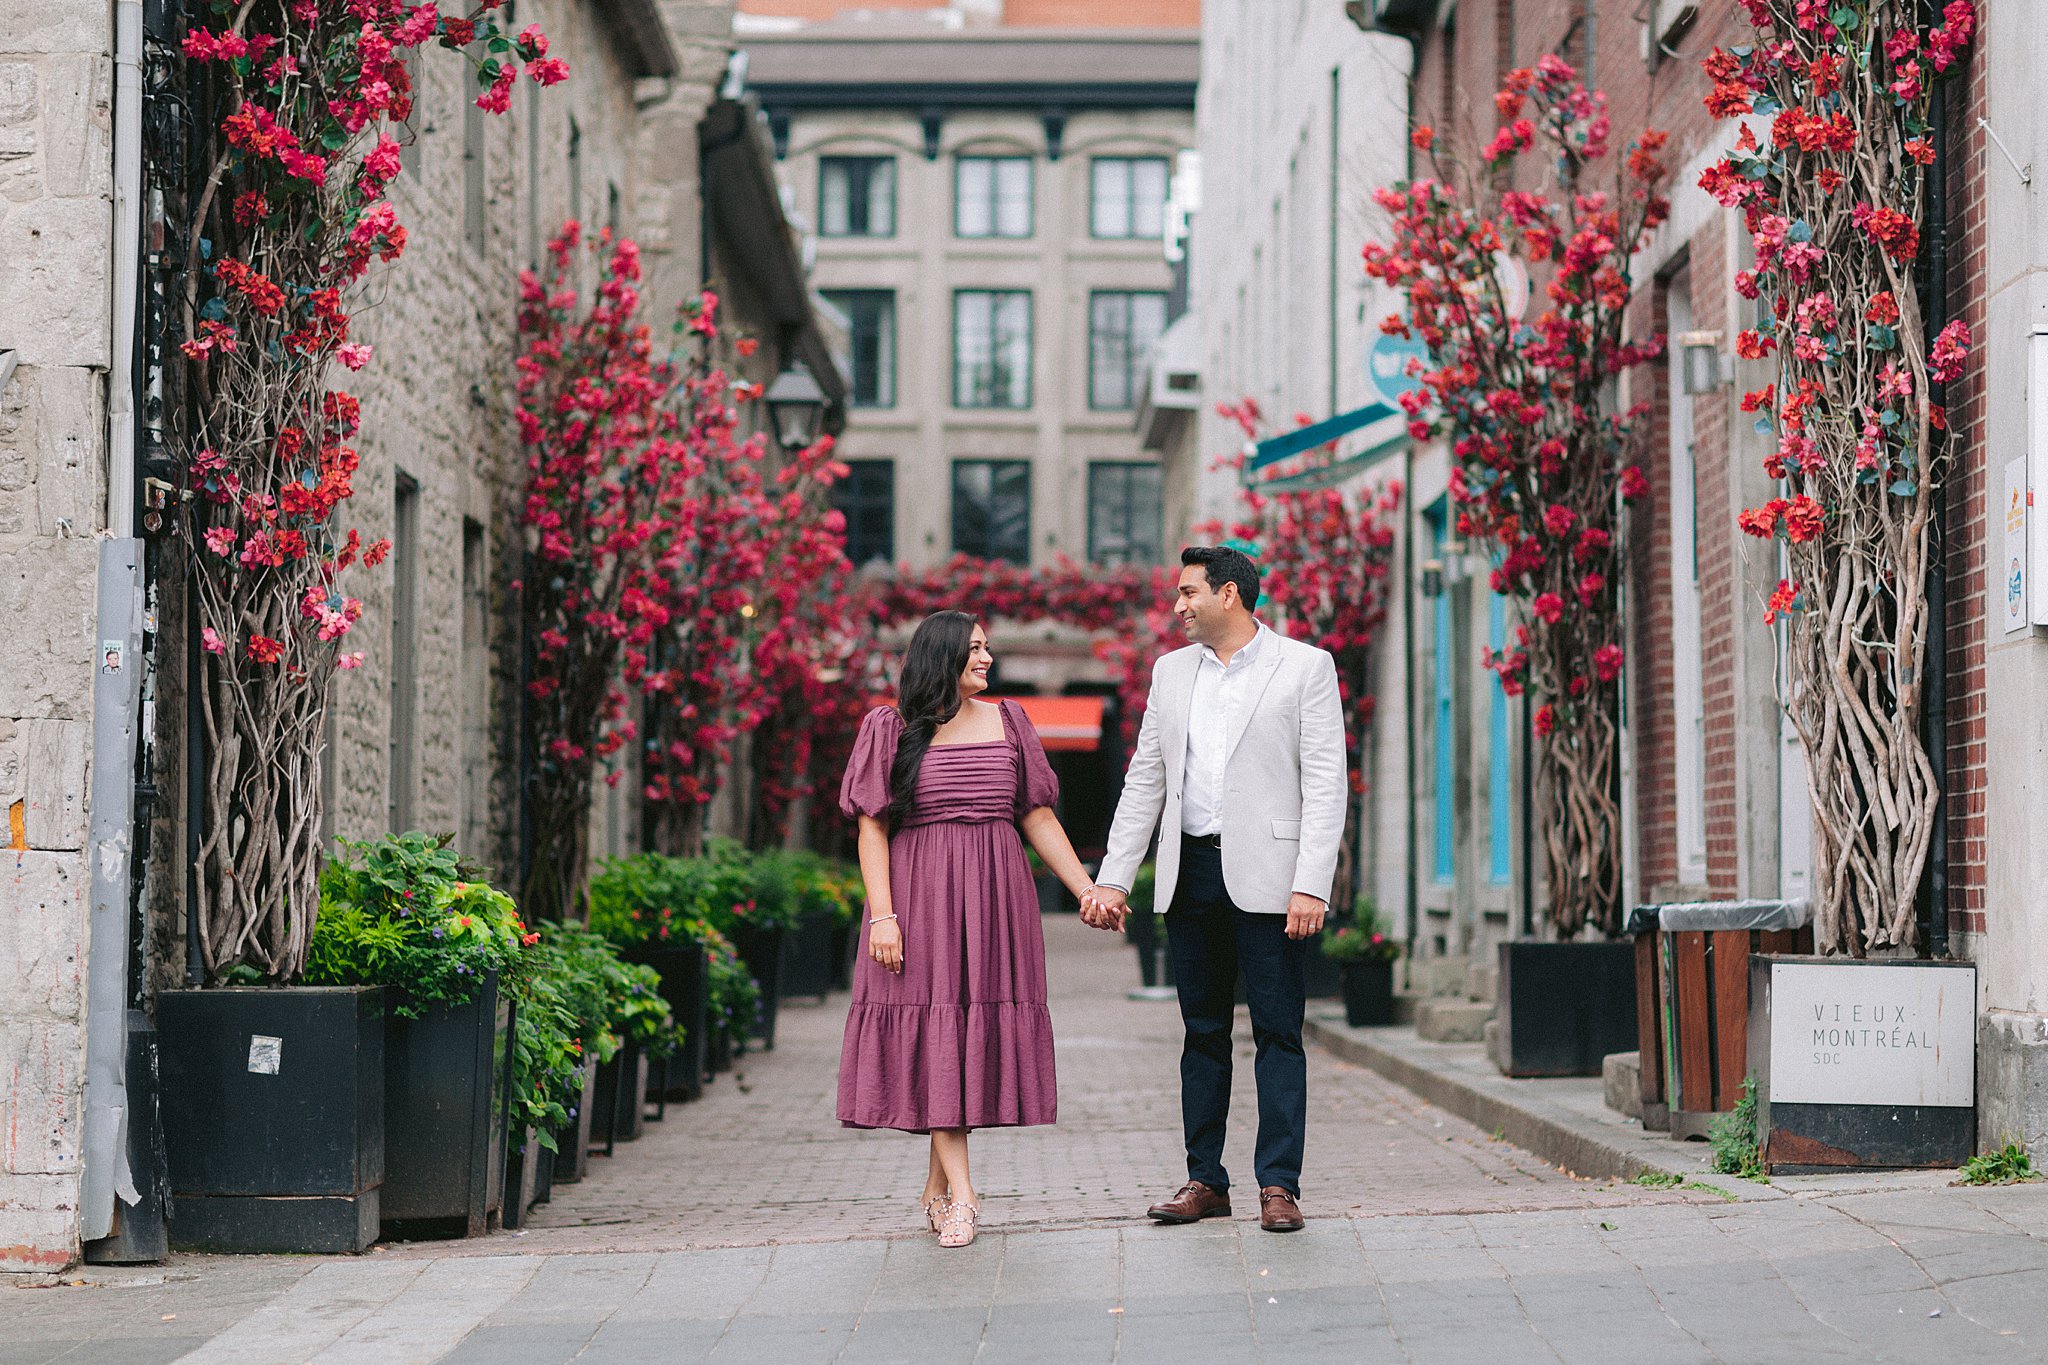 Urban romance: Exploring Montreal together